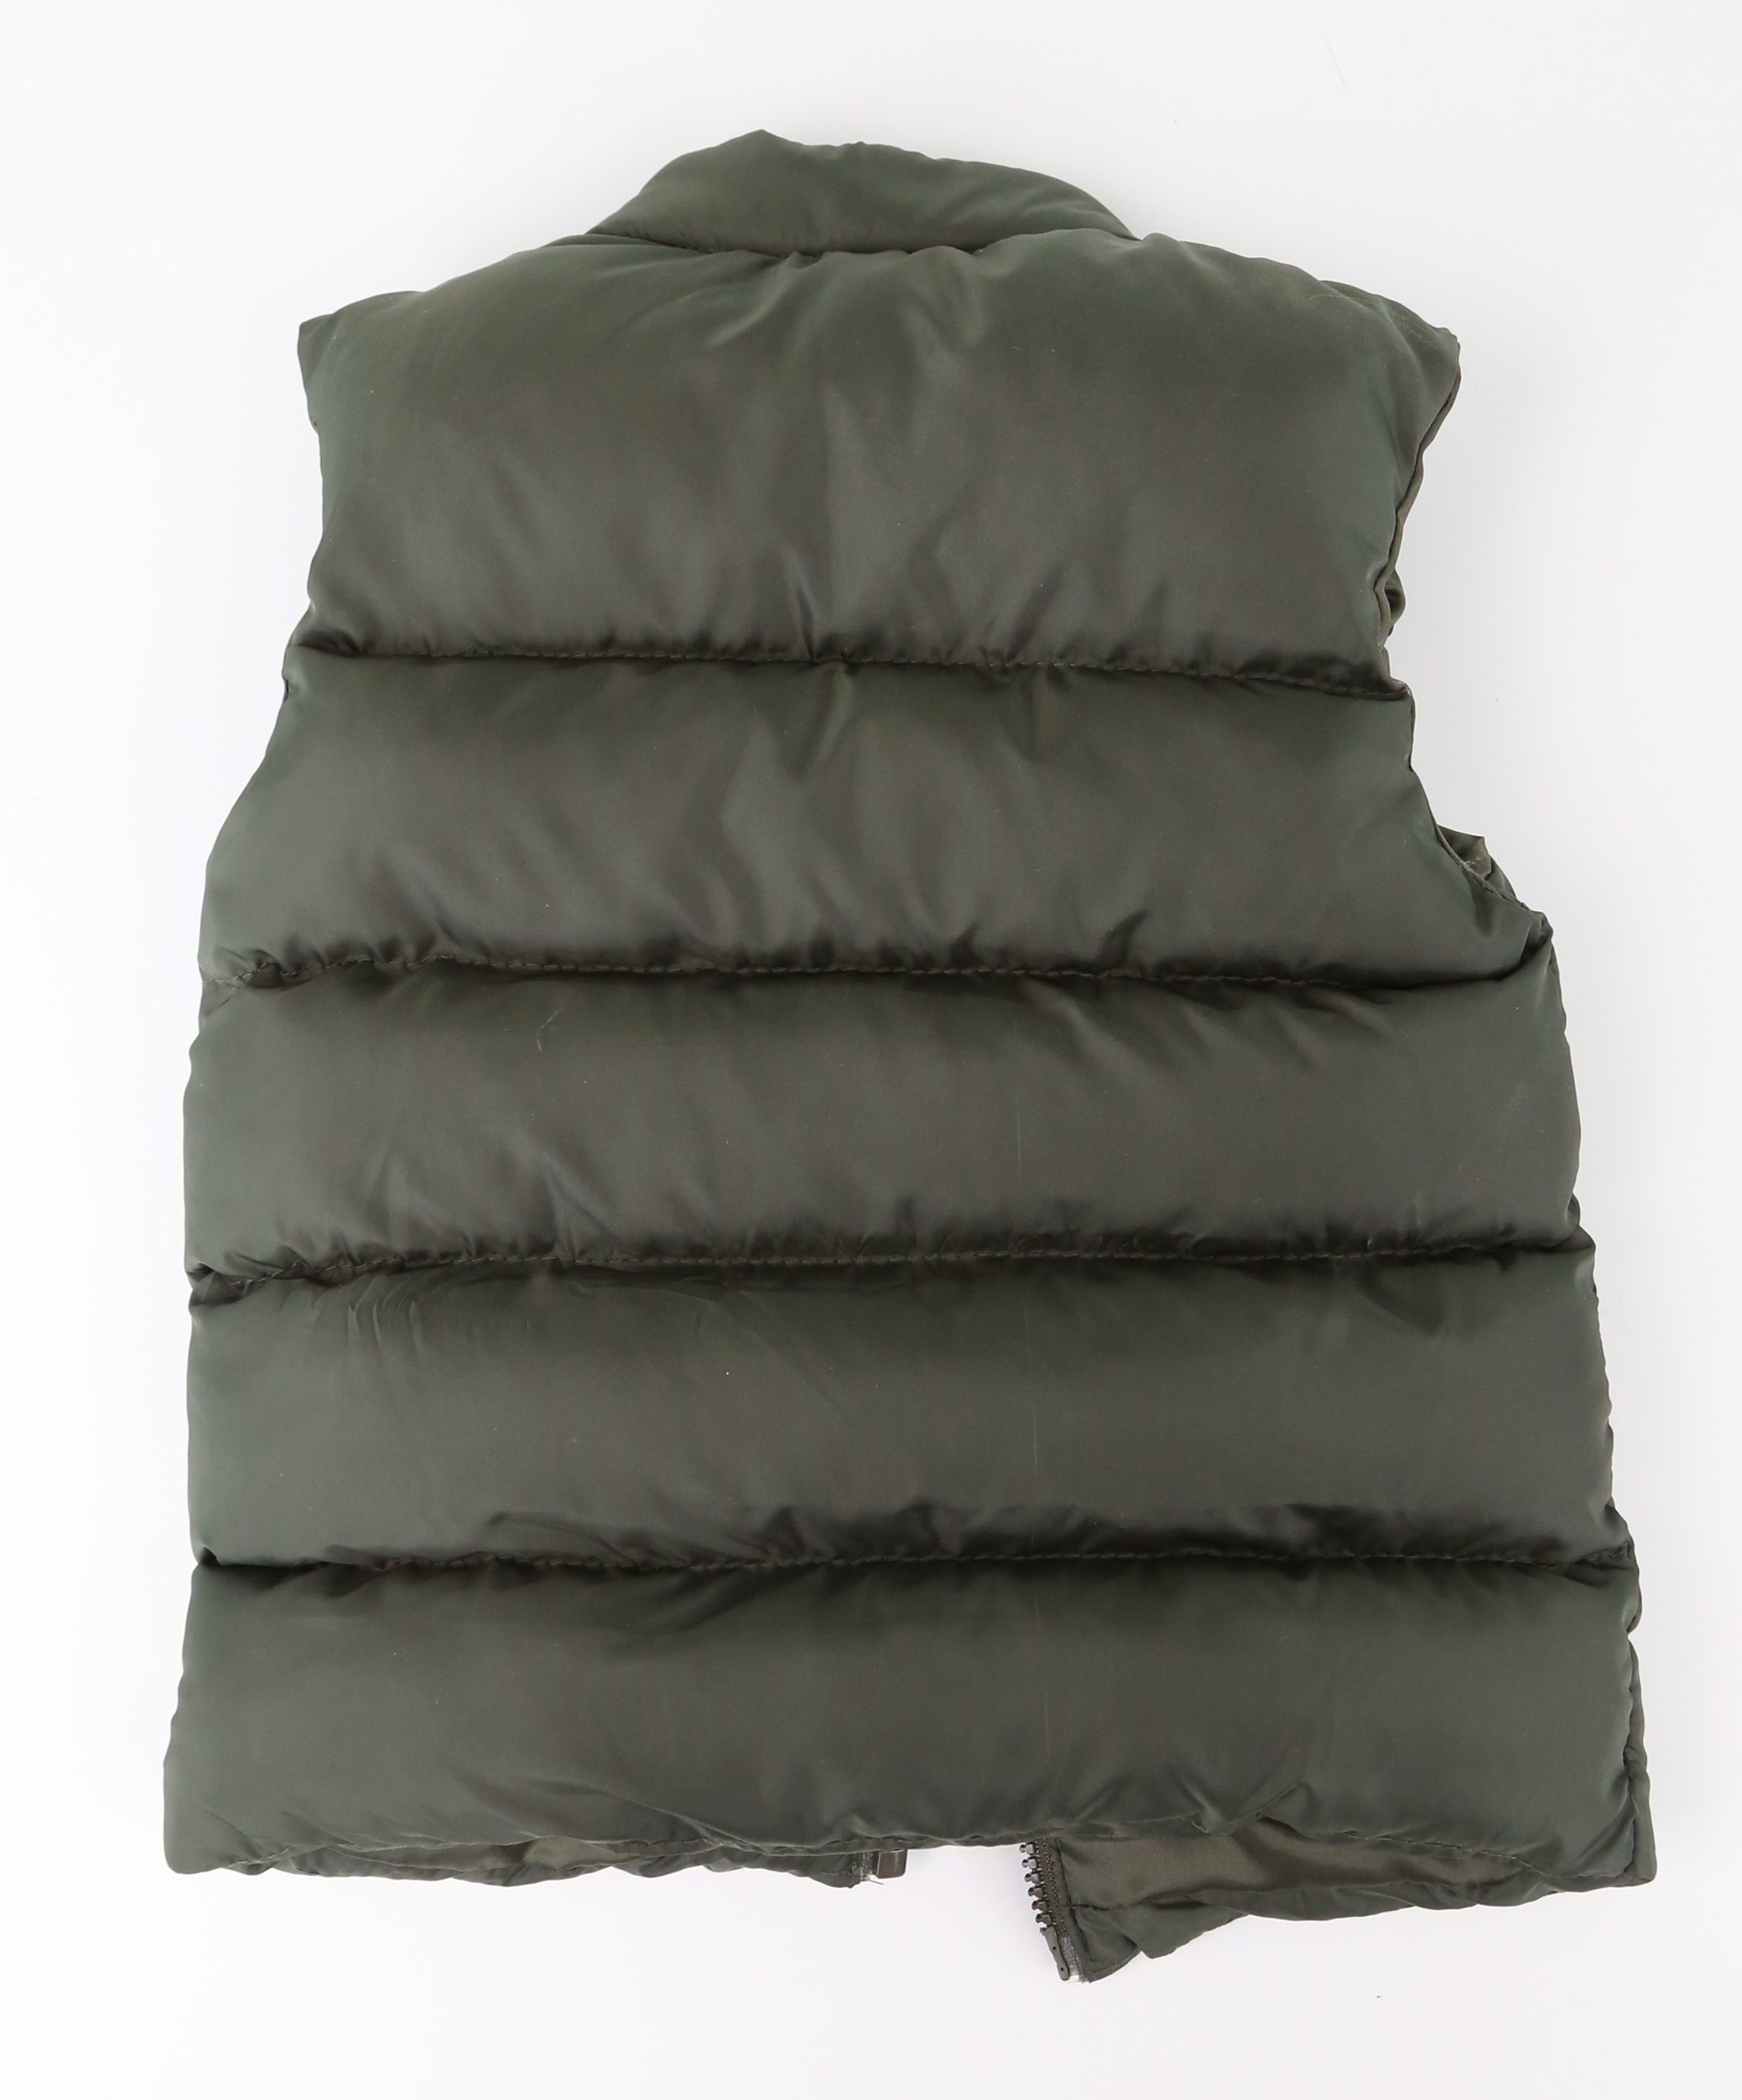 Boys Puffer Vest, Kids Padded Sleeveless Winter Outerwear - Olive Green